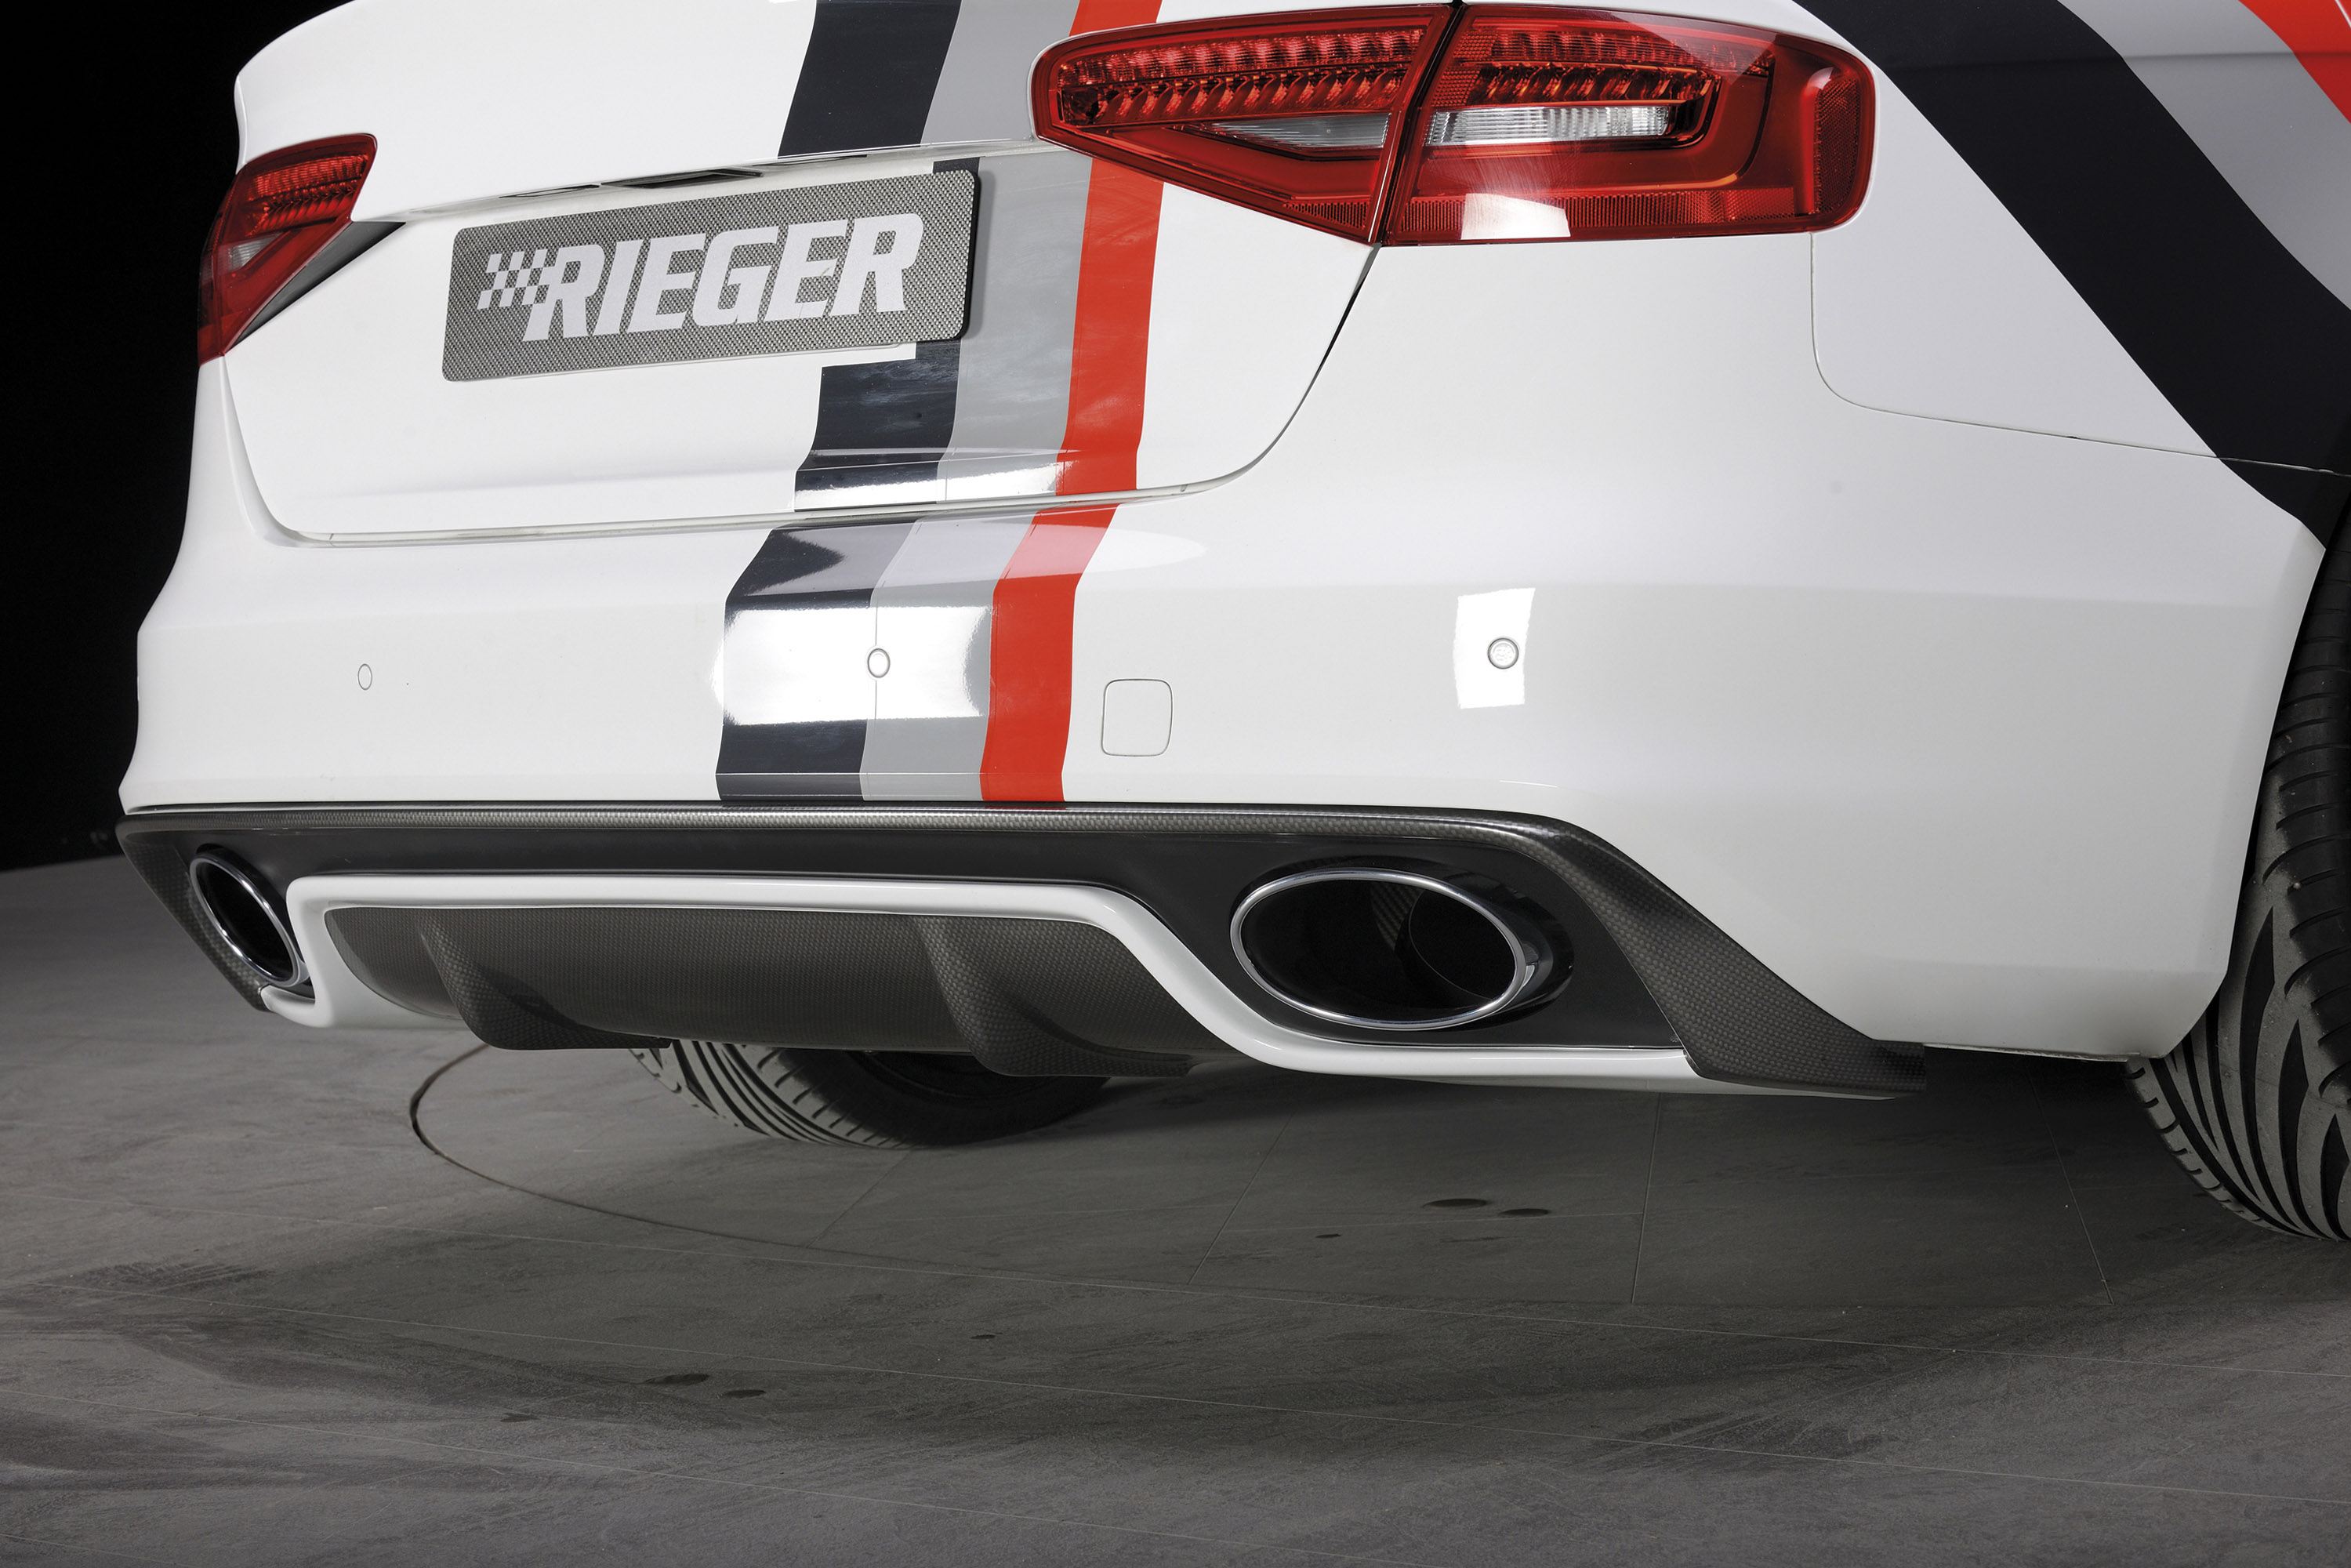 2013 Rieger Audi A4 B8 tuning e wallpaper, 2999x2000, 82206